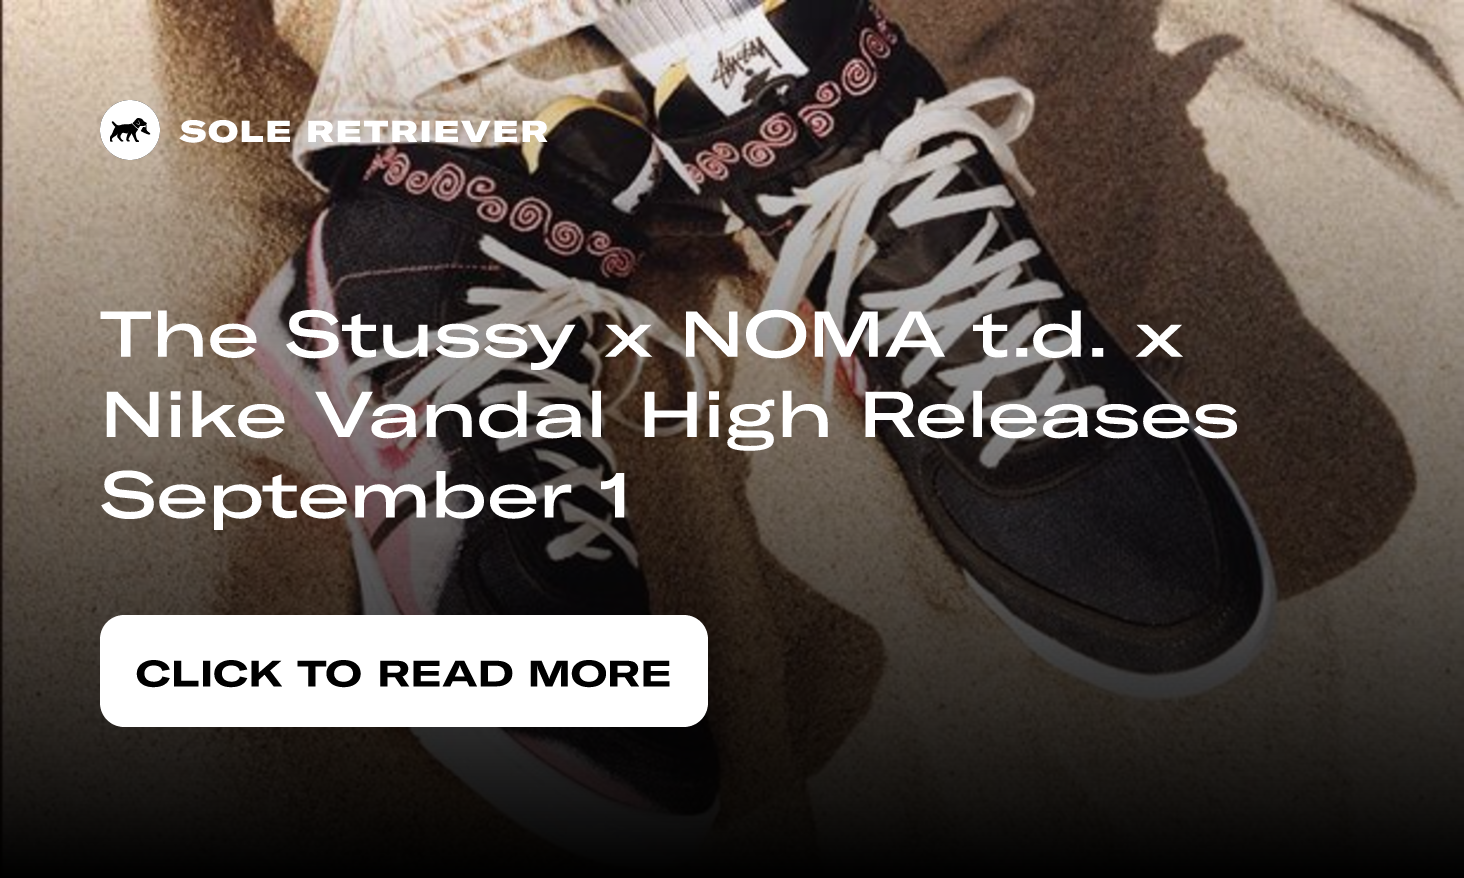 The Stussy x NOMA t.d. x Nike Vandal High Releases September 1